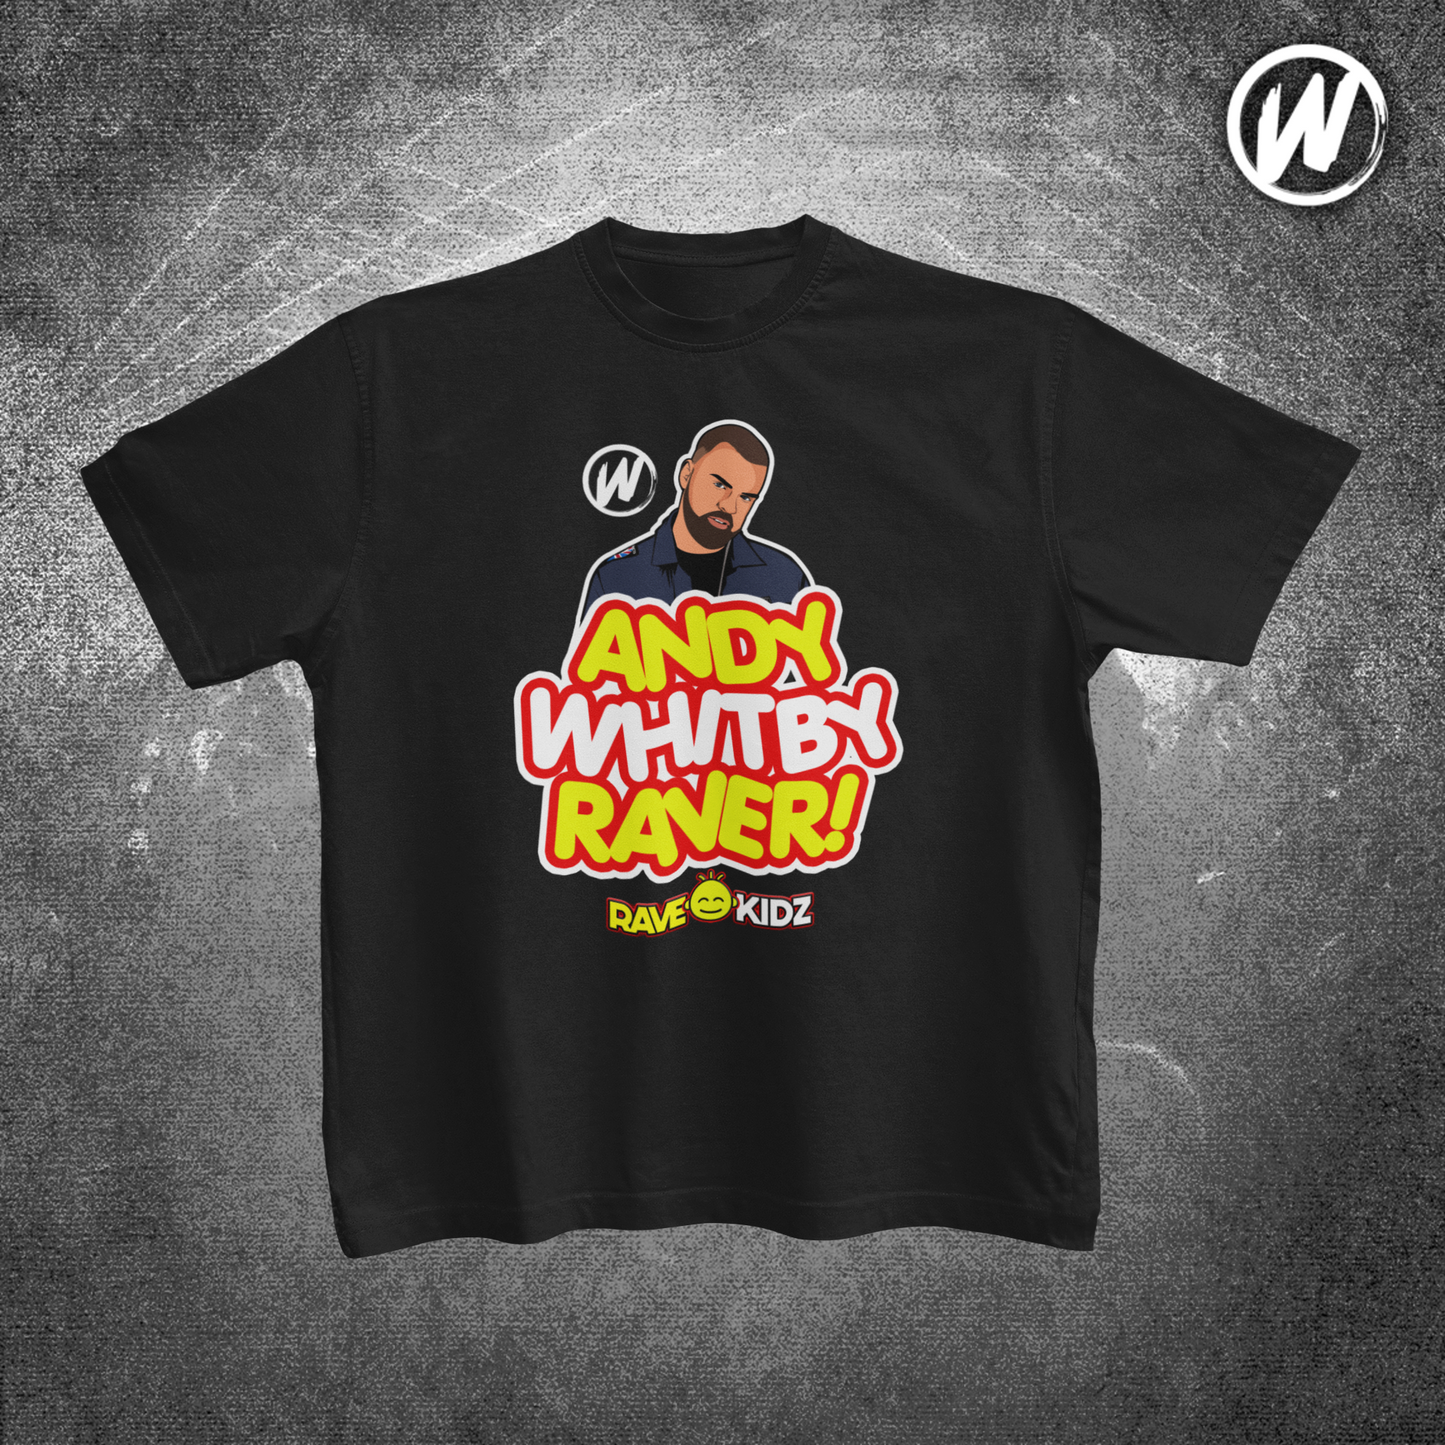 Rave Kidz - Whitby Raver - T-shirt (Black)